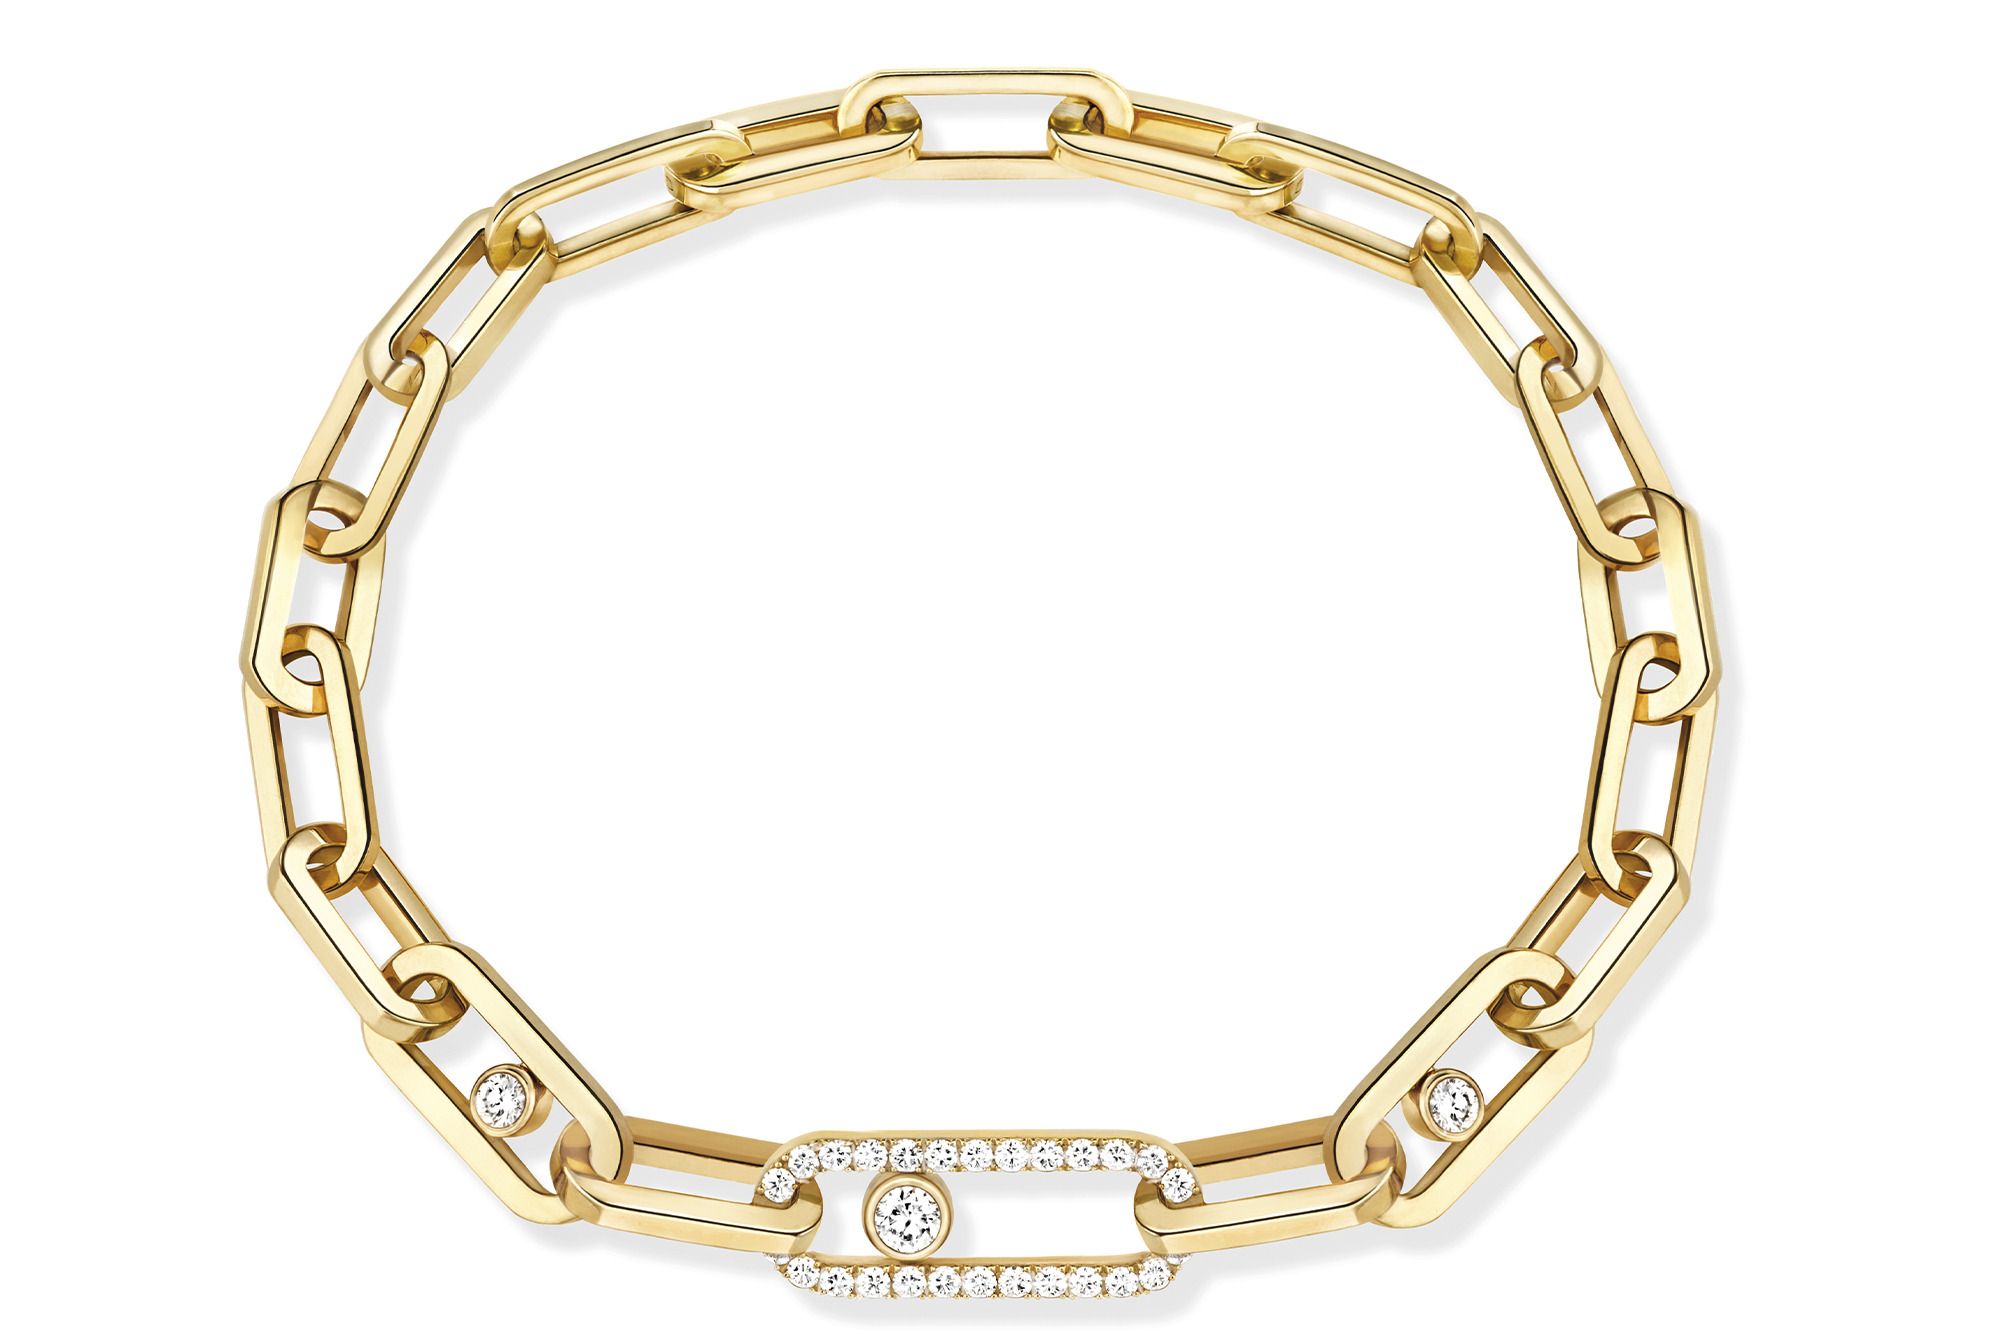 Messika gold chainlink bracelet